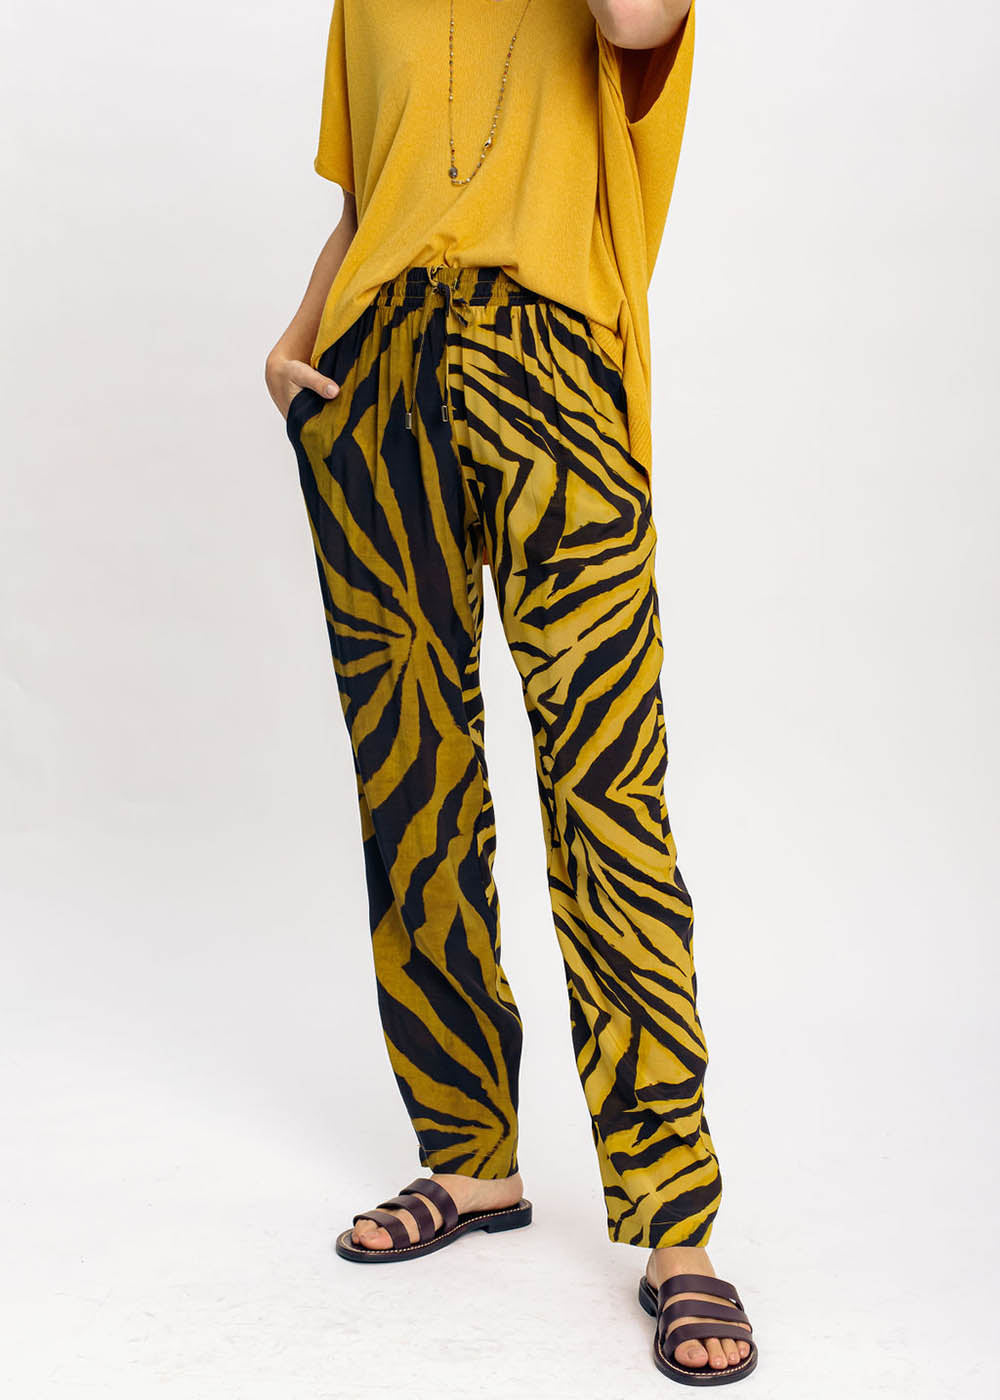 Zebra printed pants